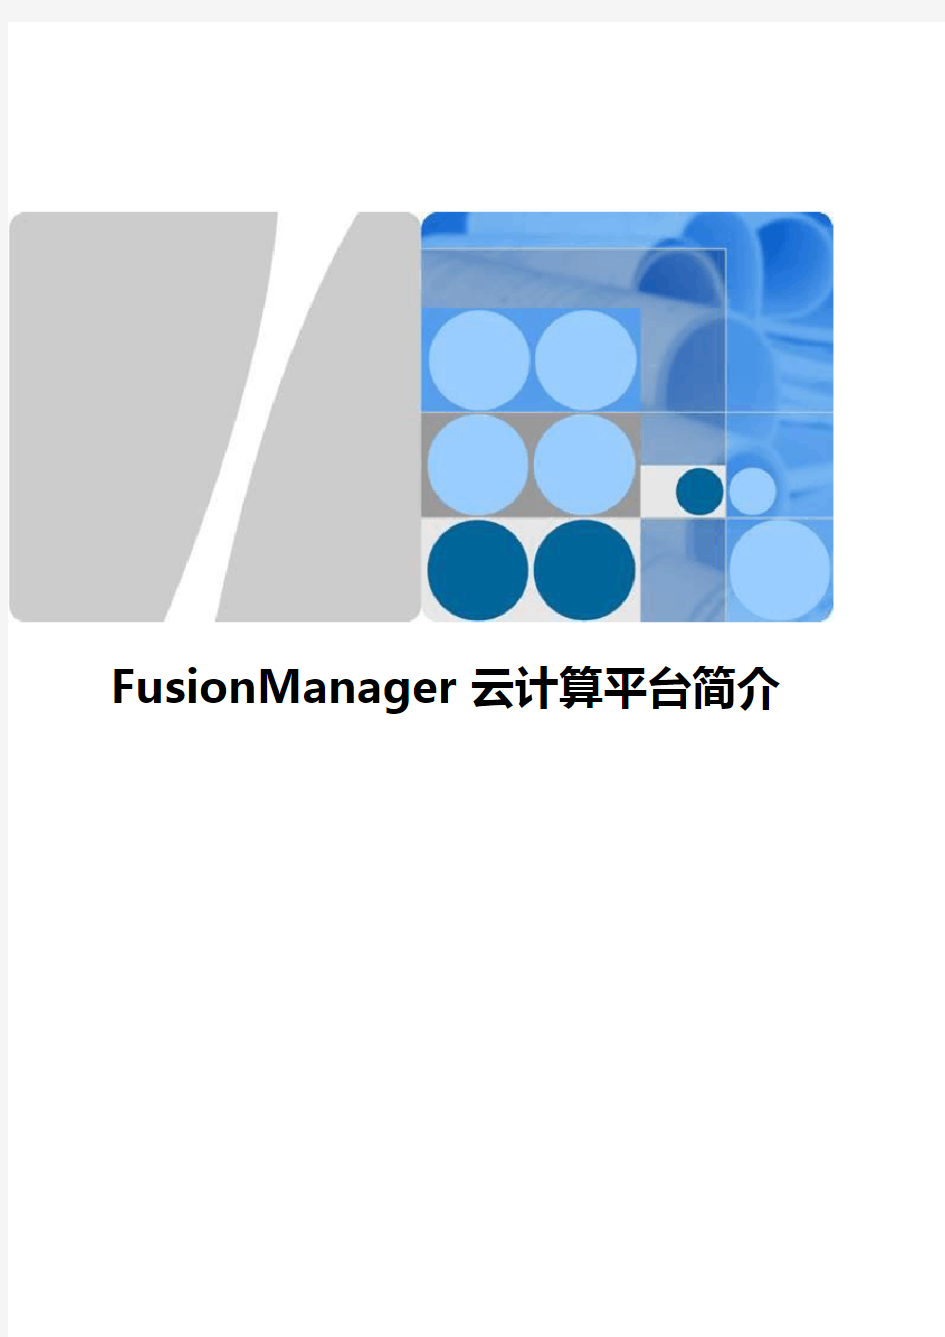 FusionManager云计算平台简介